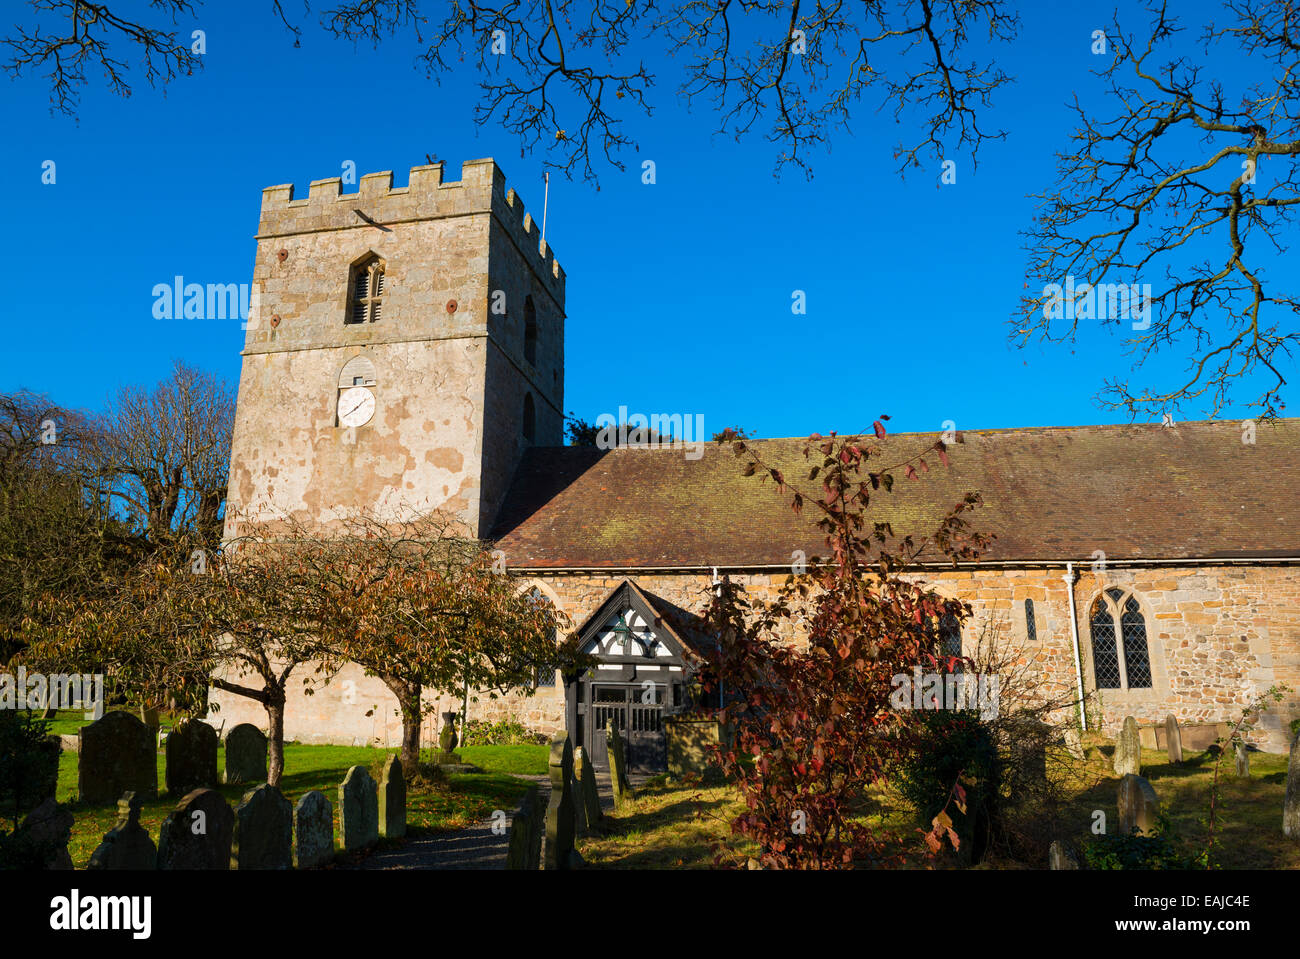 St James' Church in Cardington, Shropshire, England. Stock Photo